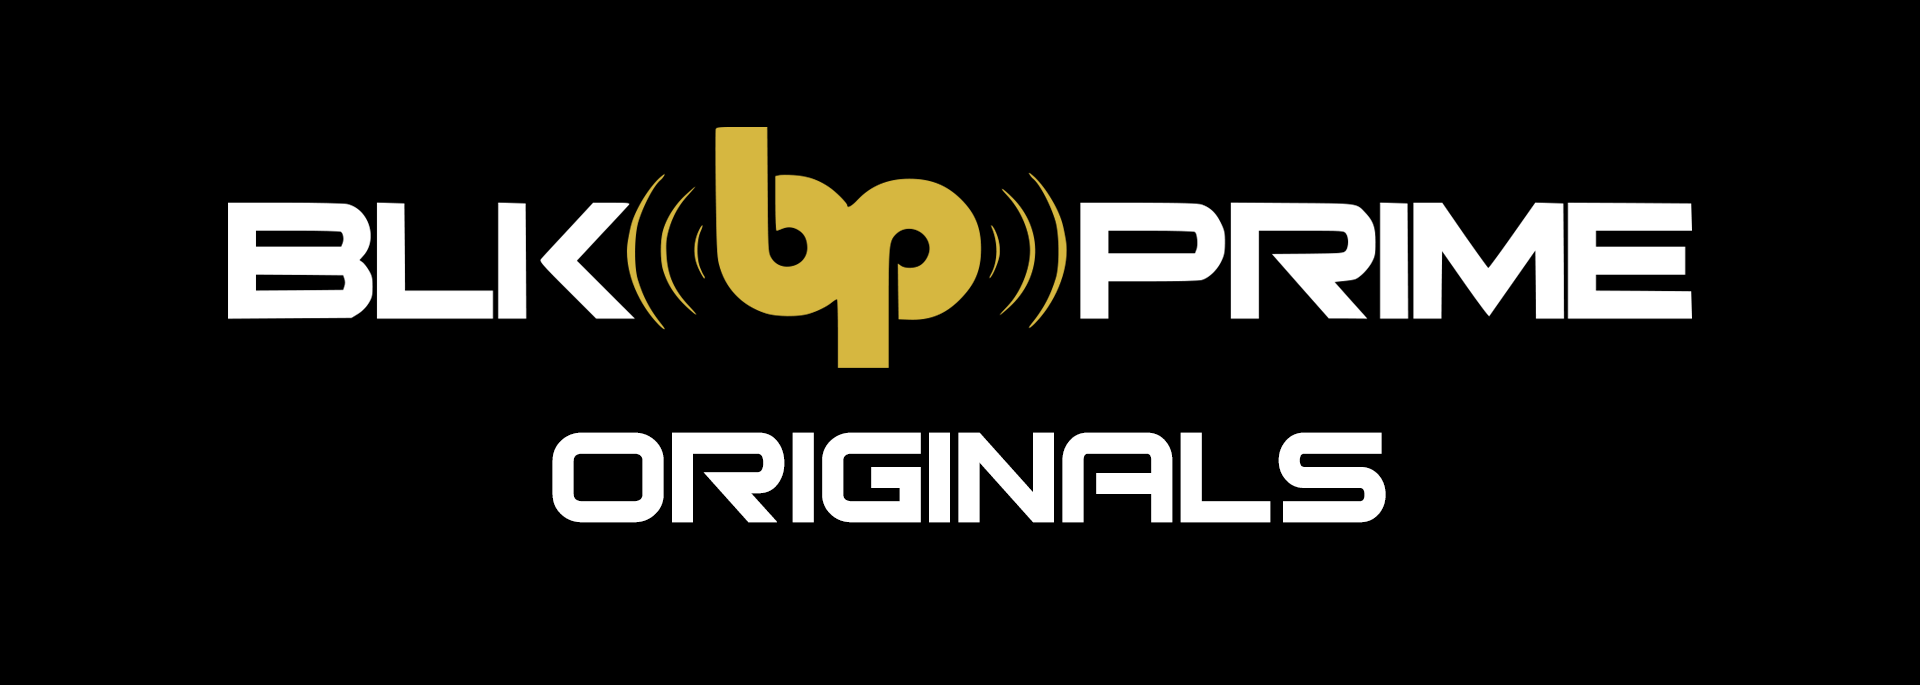 BLK Prime Originals channel